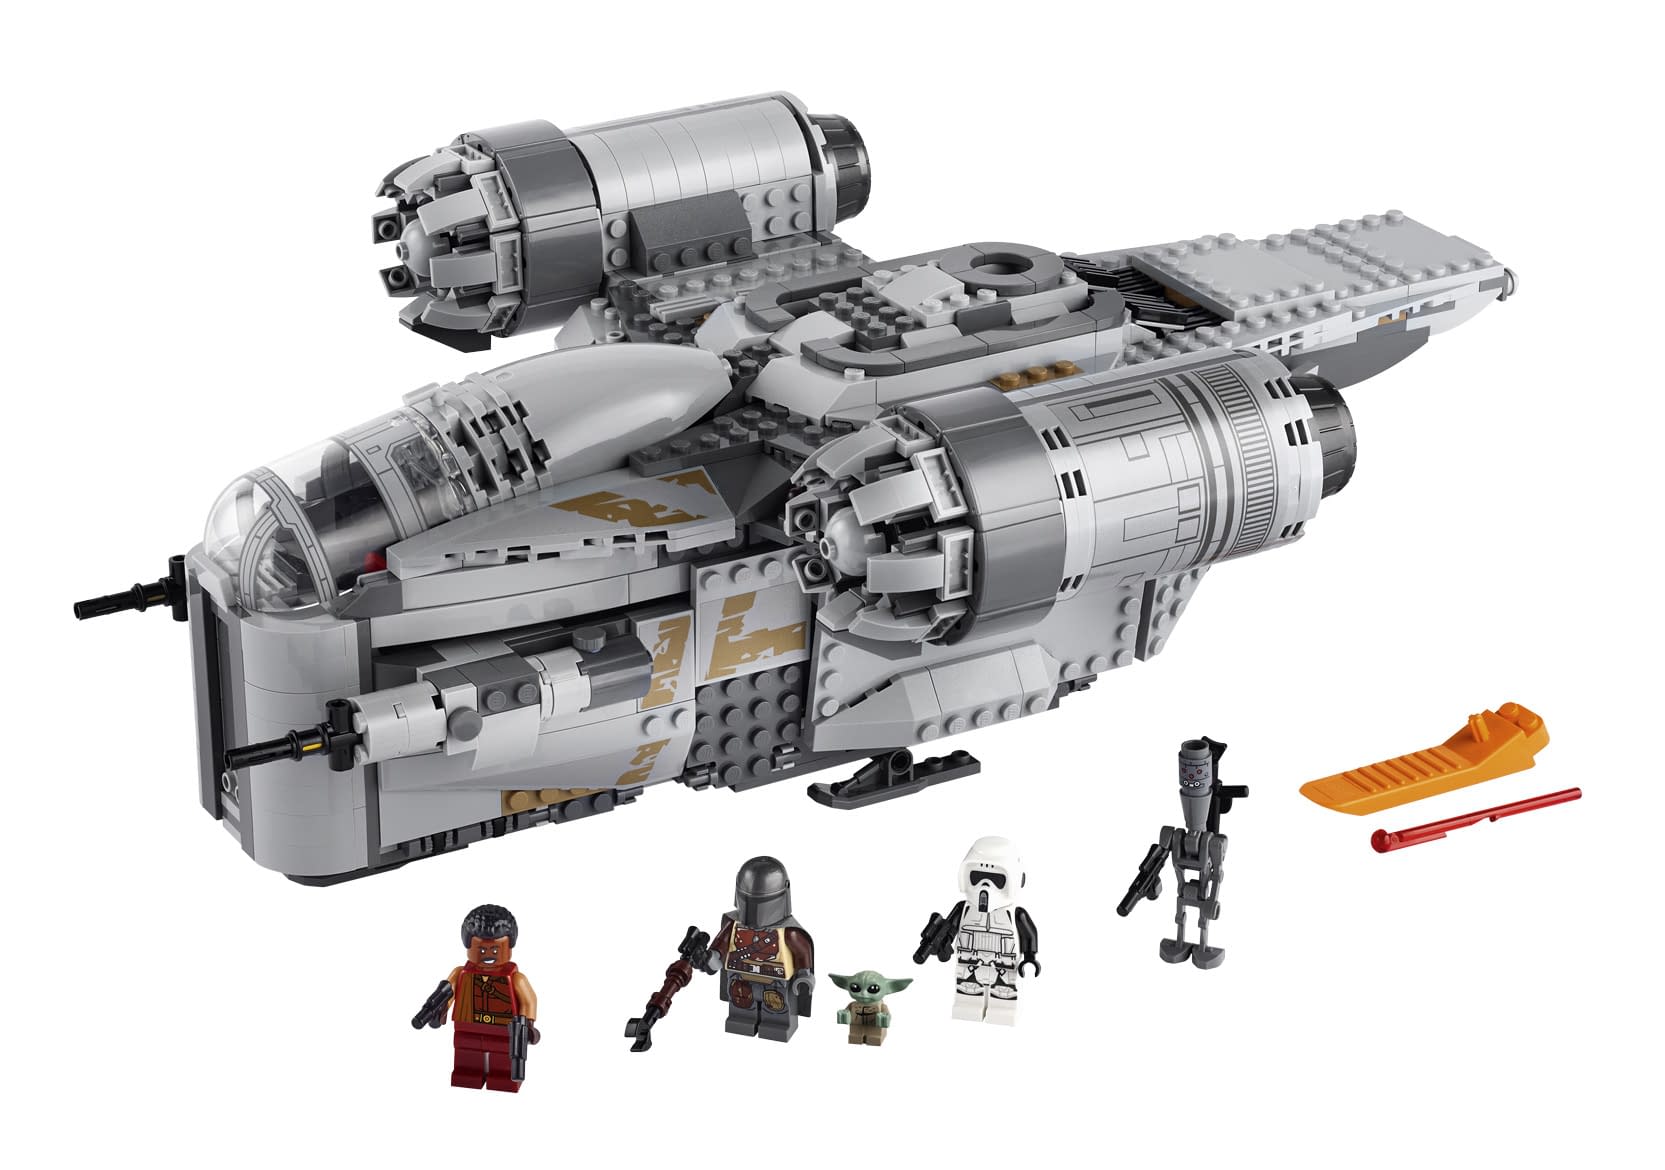 "The Mandalorian" Razor Crest Ship Gets Its Own LEGO Set